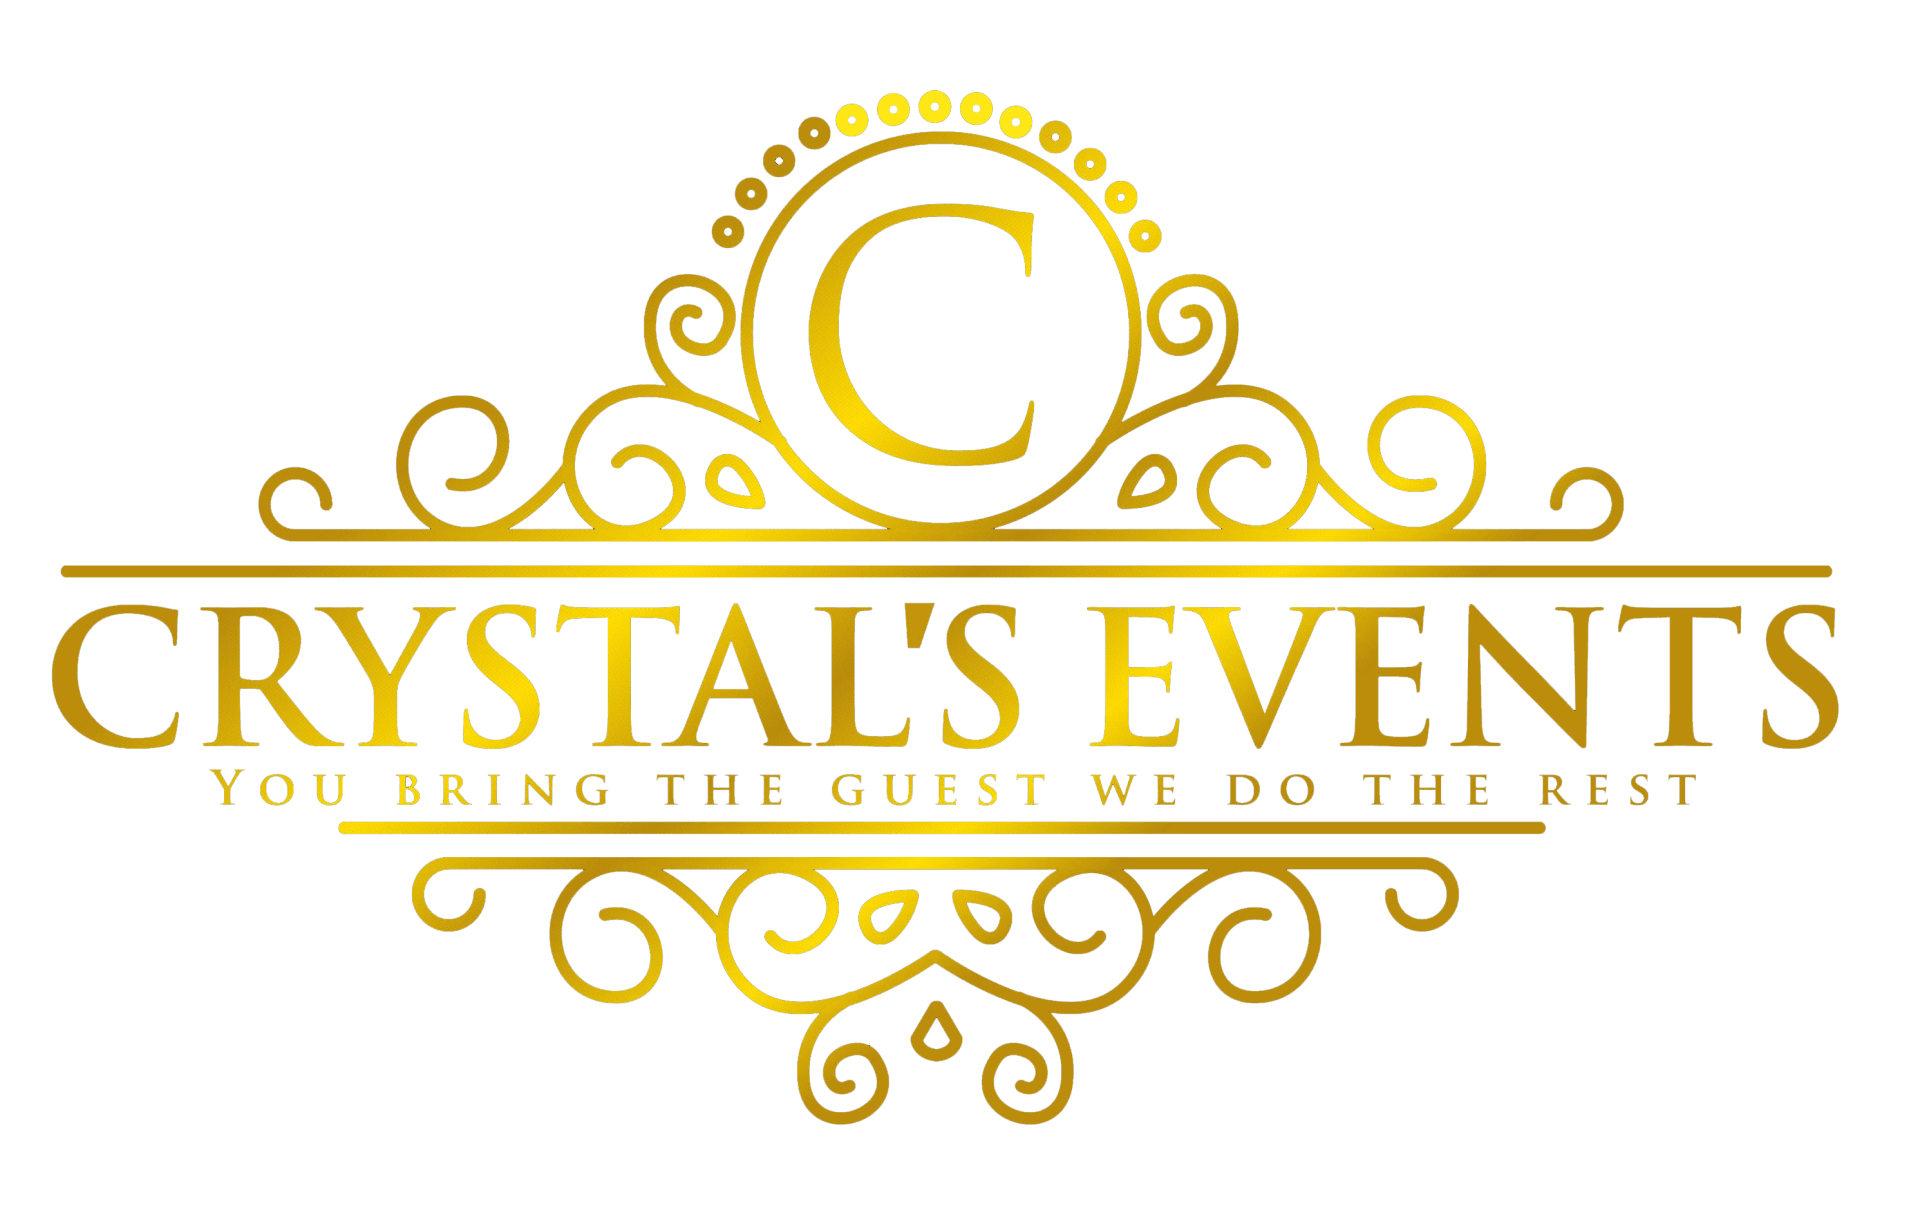 Crystals events